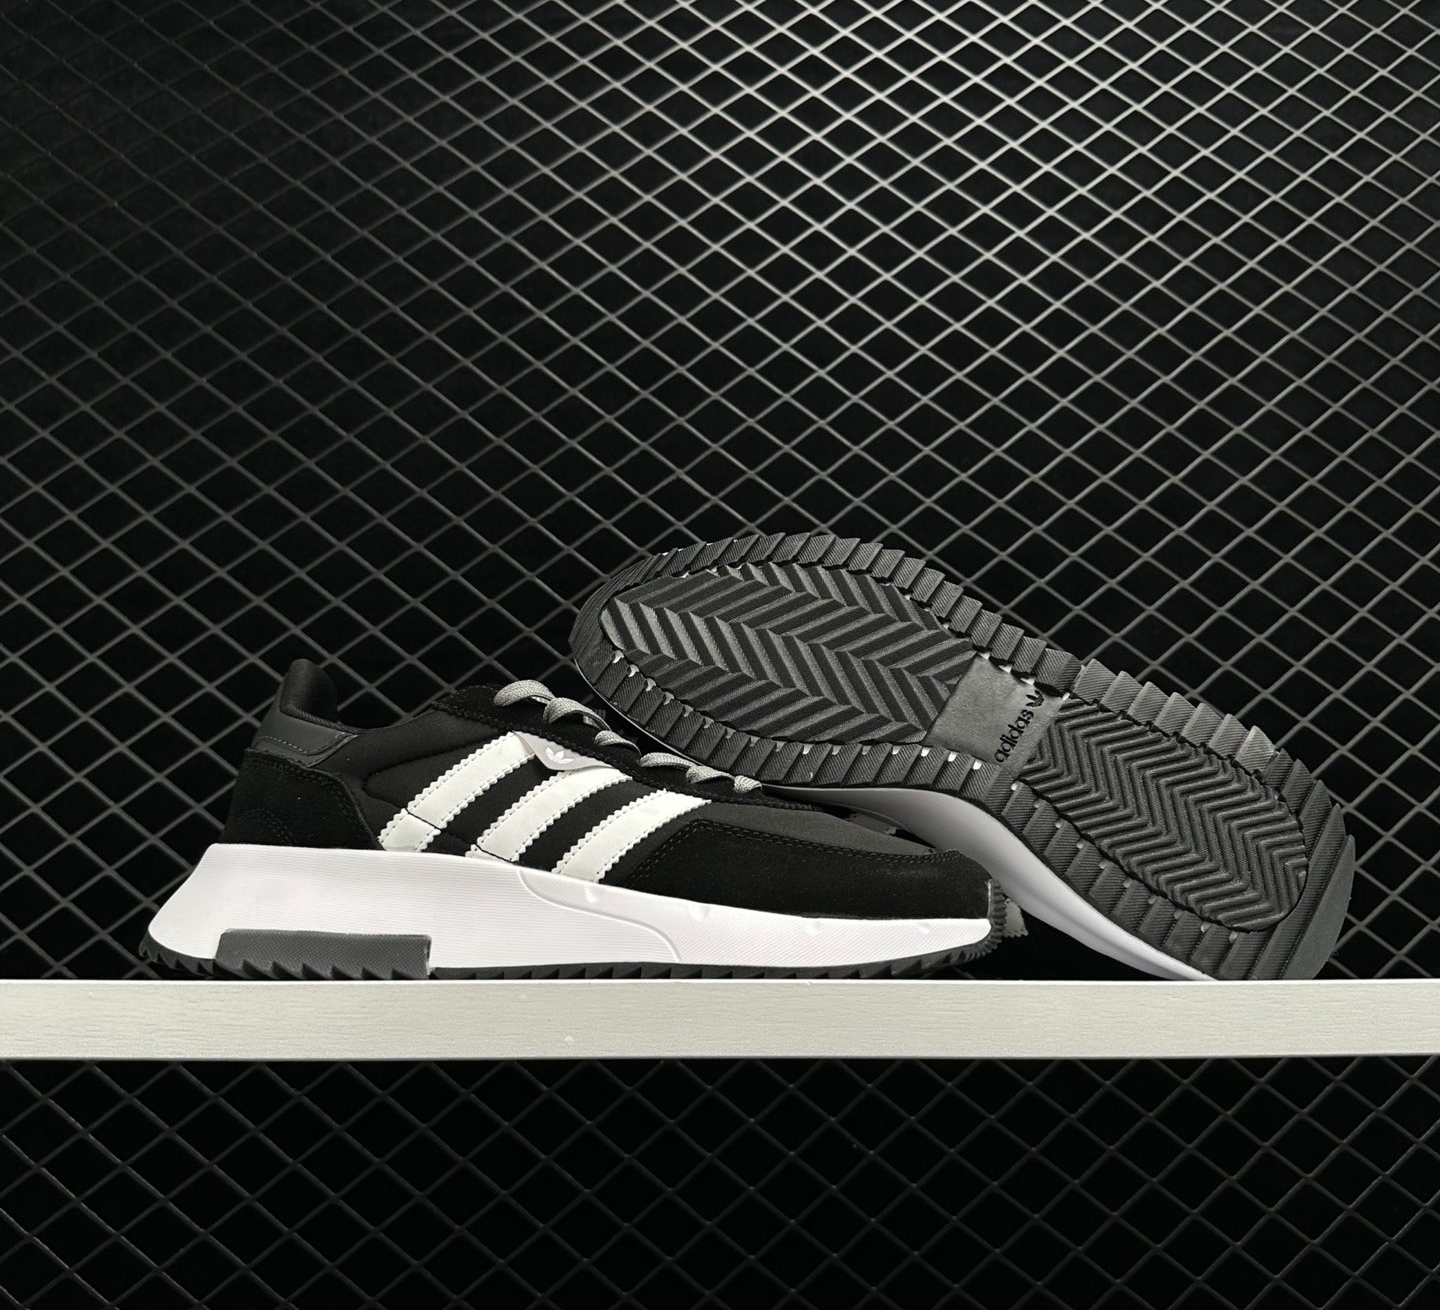 Adidas Retropy F2 Black White: Classic Style with a Modern Twist